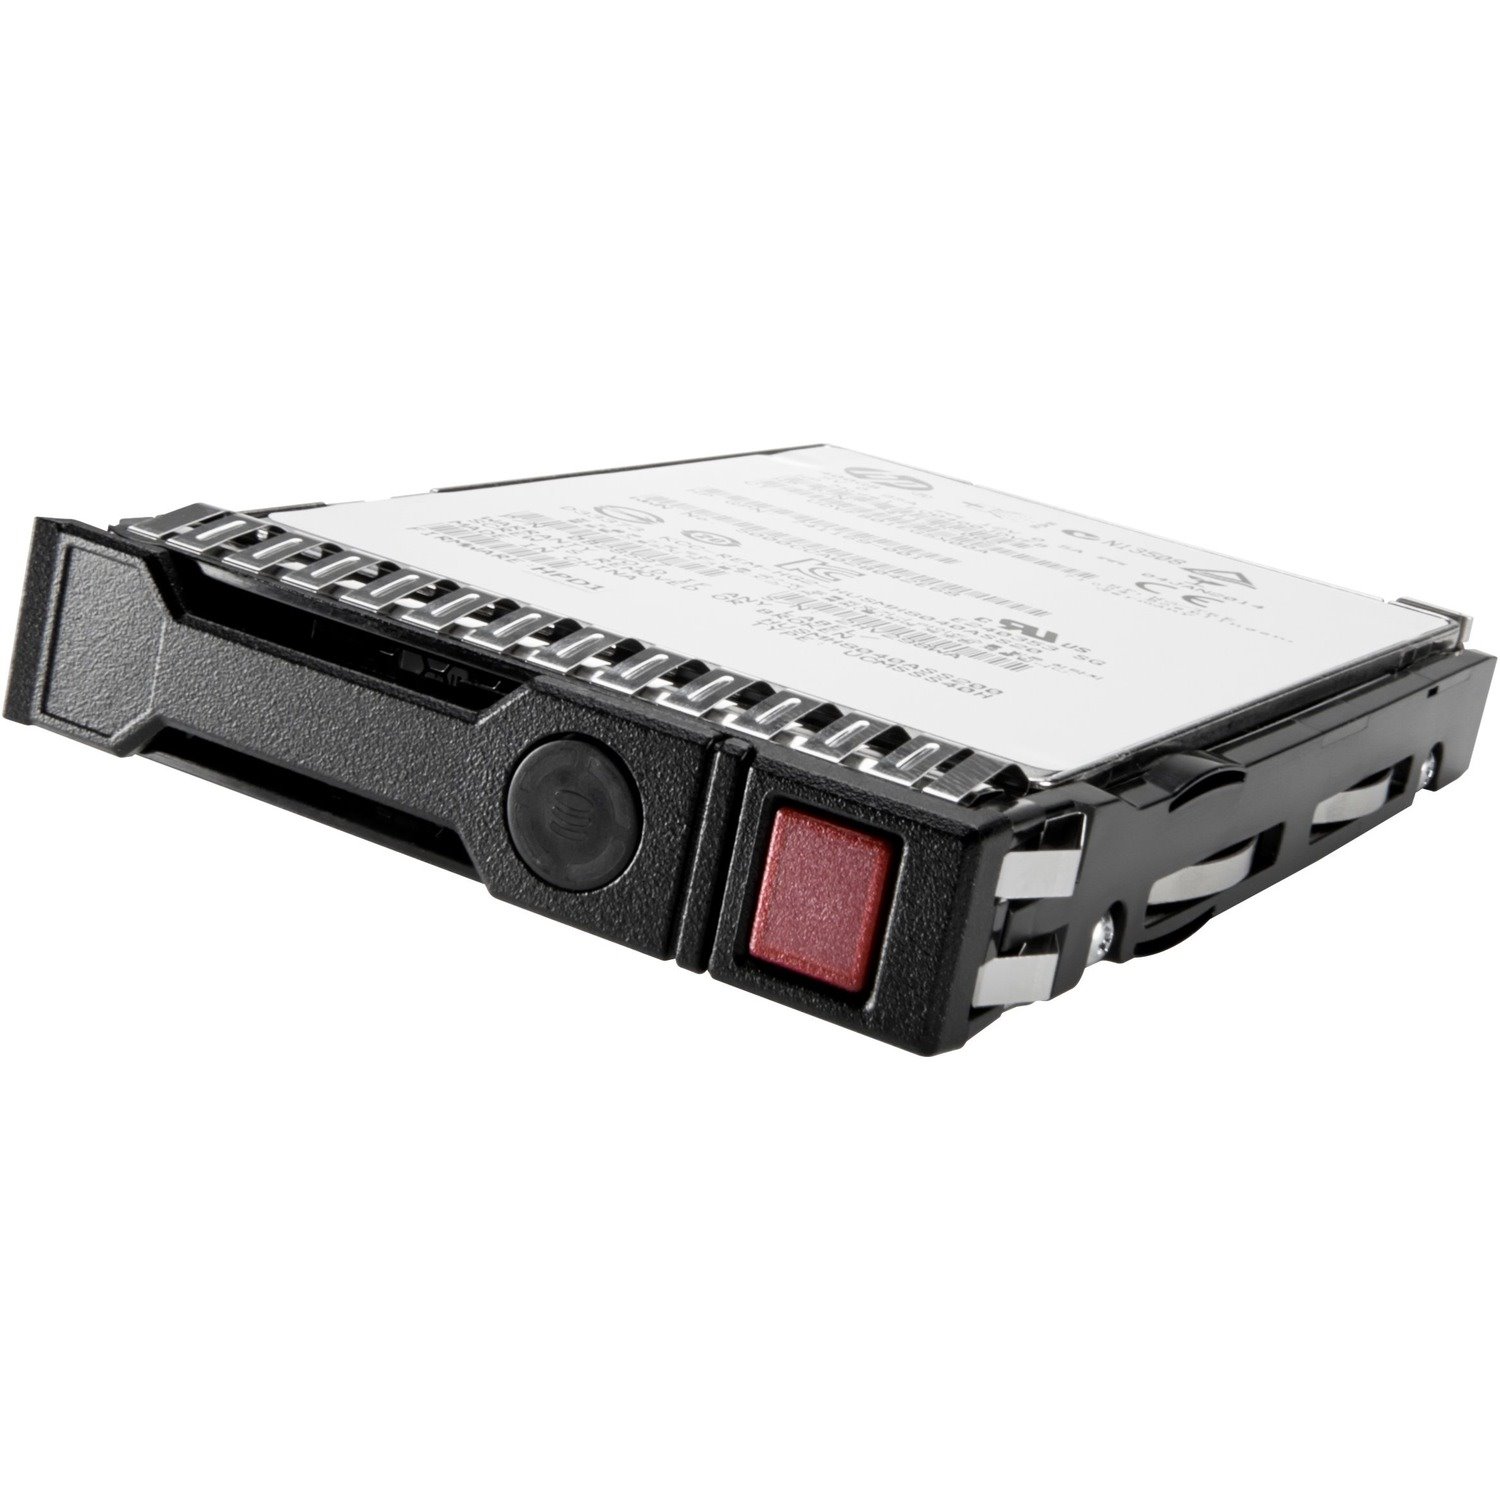 Axiom 240GB Enterprise EV200 2.5-inch Hot-Swap SATA SSD for HP